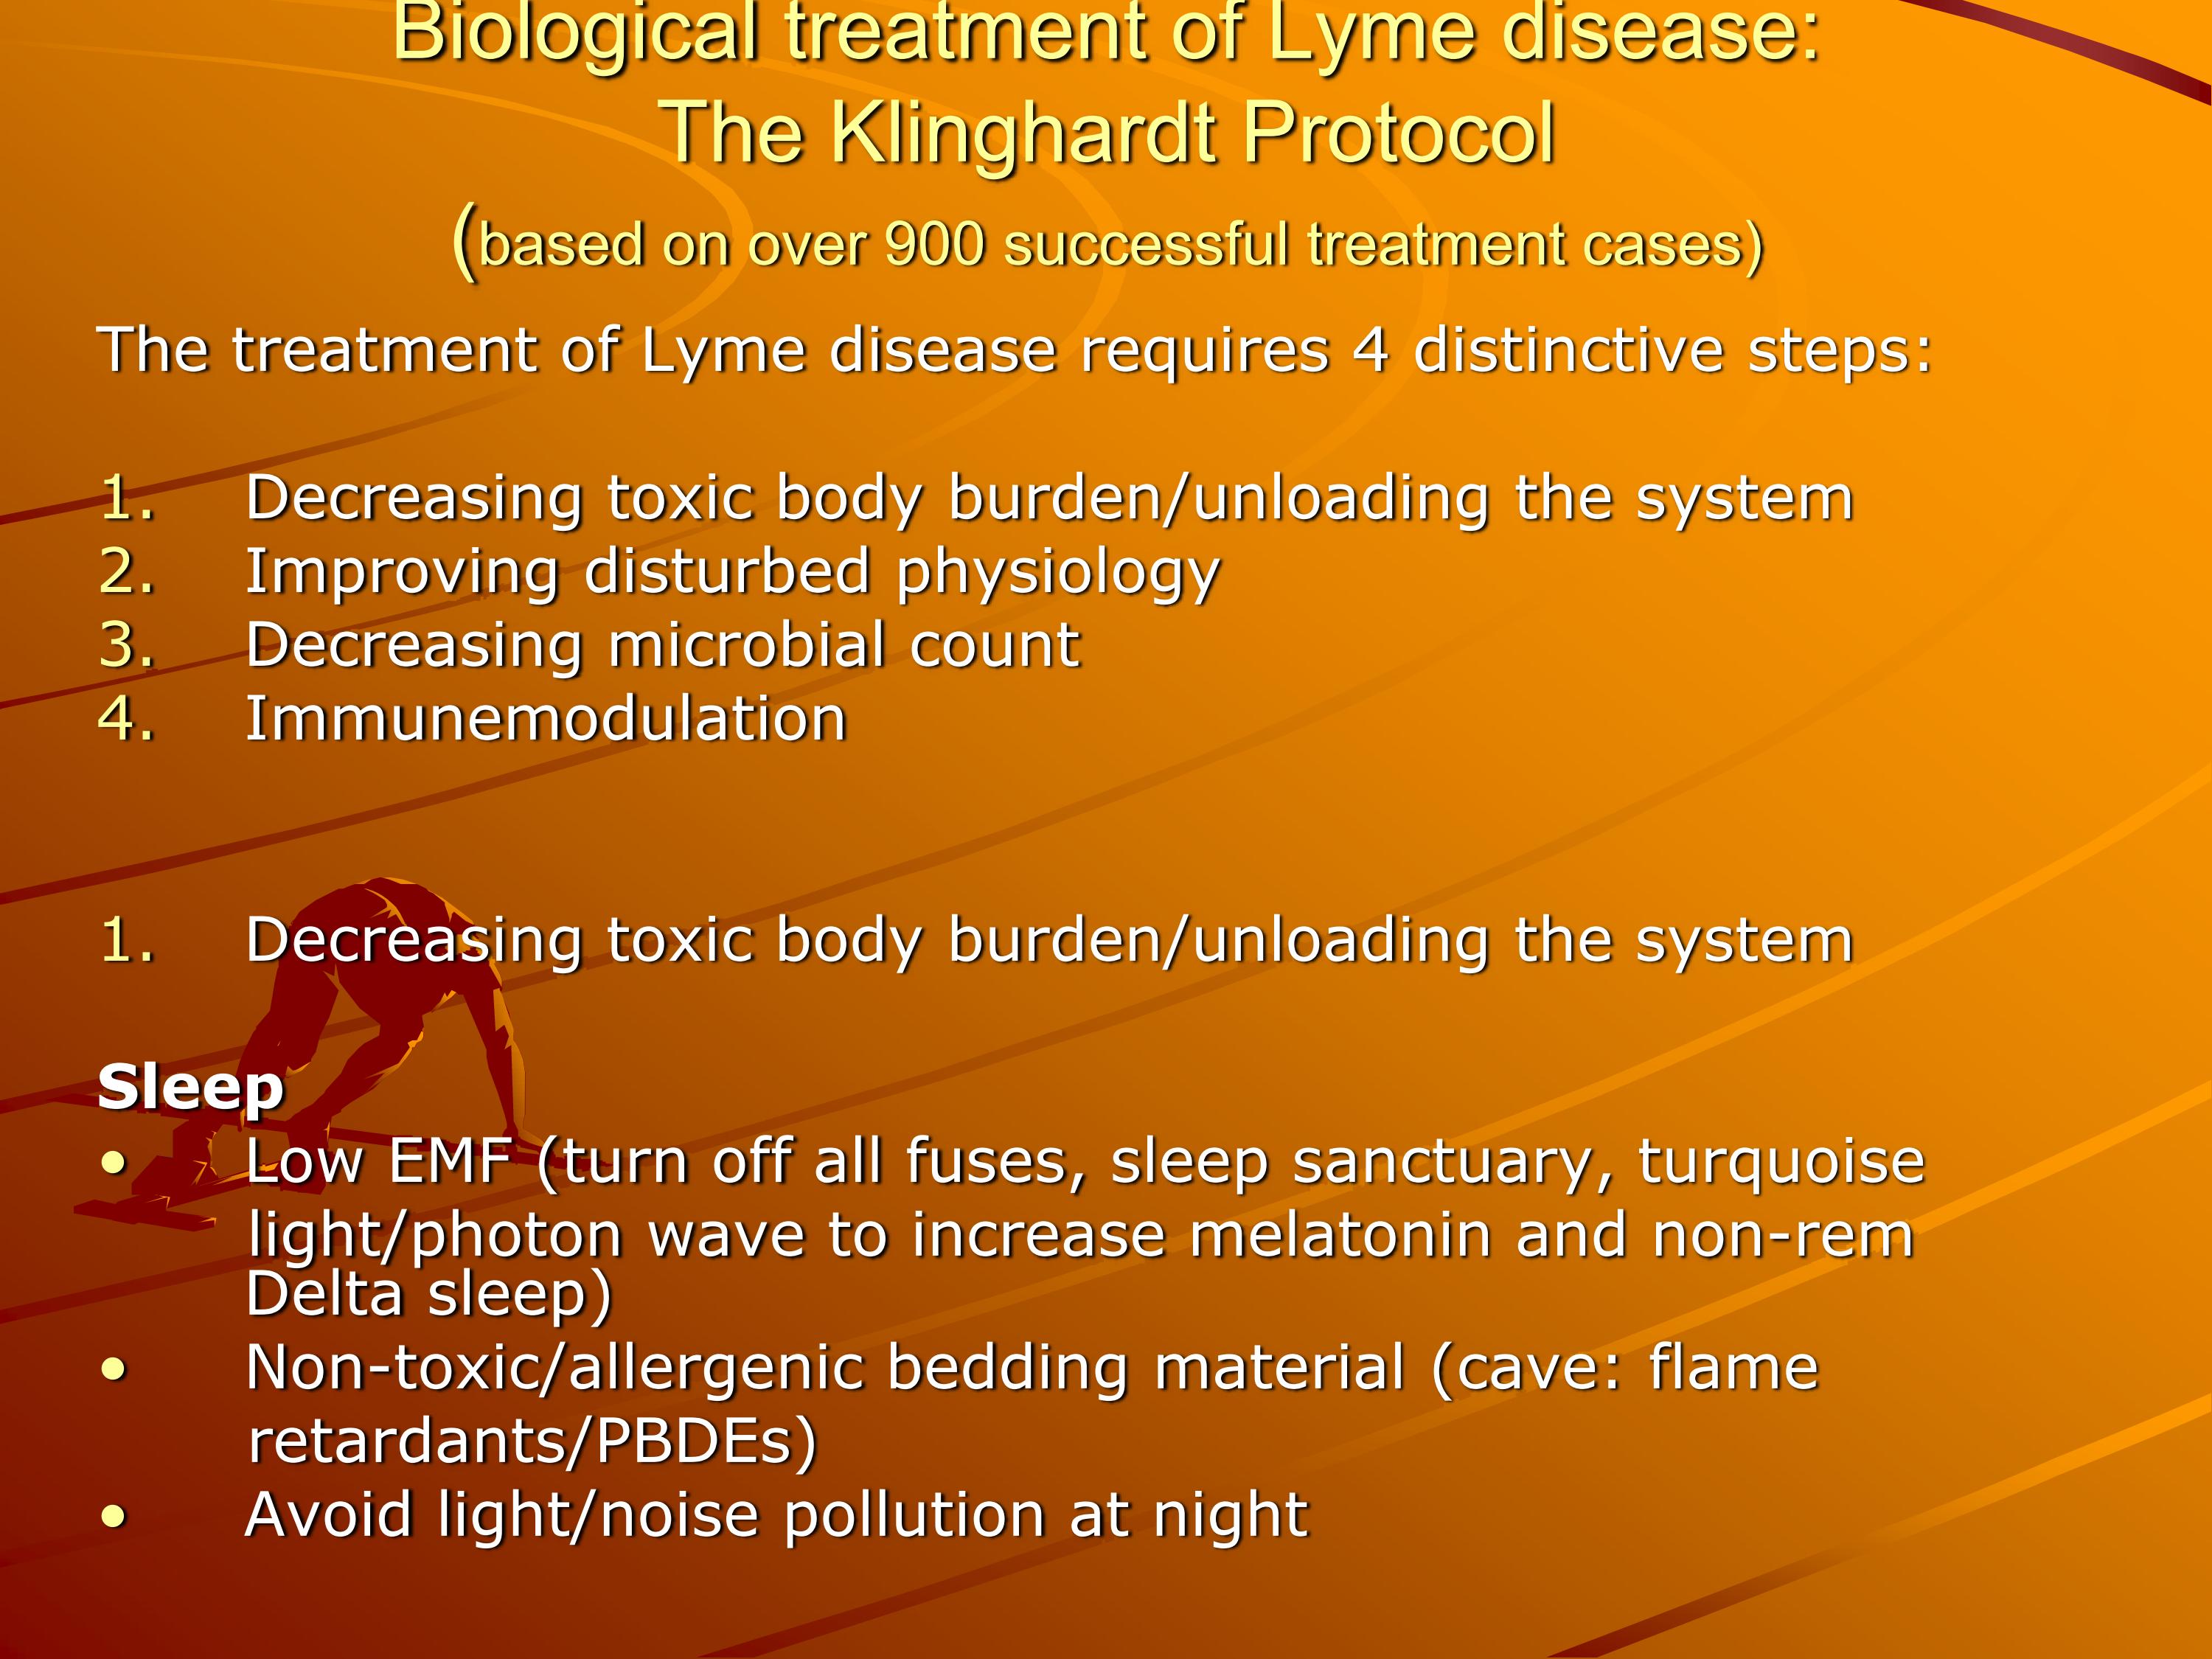 Klinghardt Bilological Treatment of Lyme 1